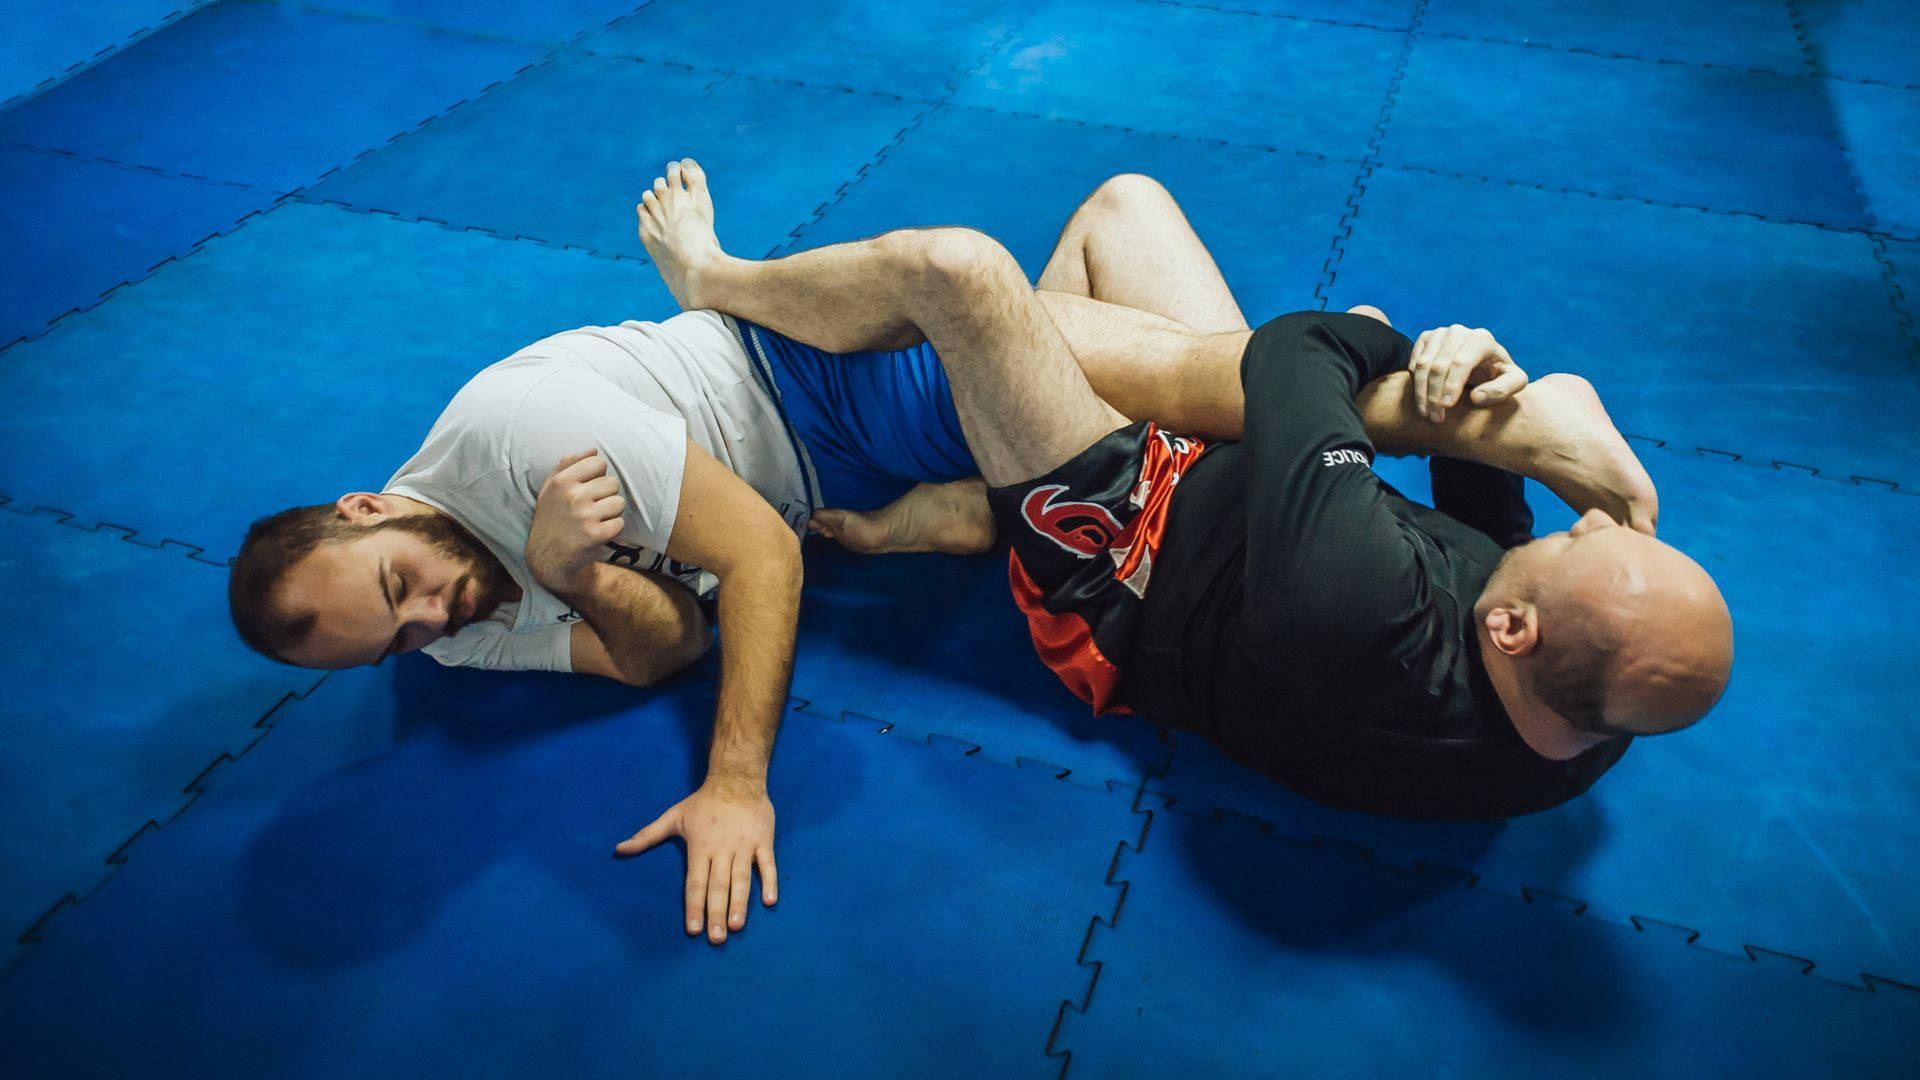 Brazilian Jiu-jitsu Sports Practice Leg Lock Background